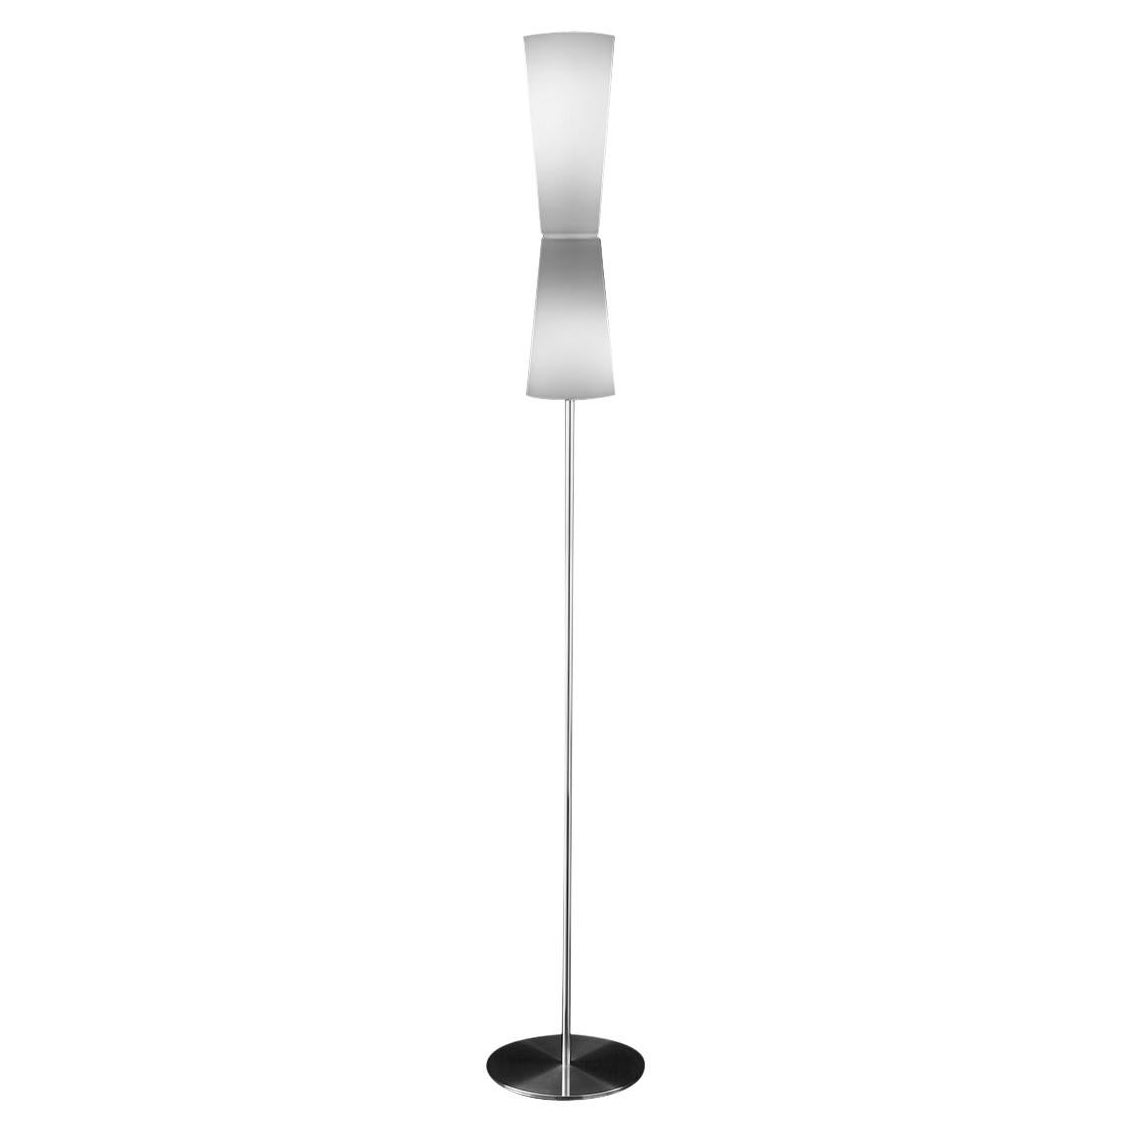 Stefano Casciani Floor Lamp 'Lu-Lu' Murano Glass and Metal by Oluce